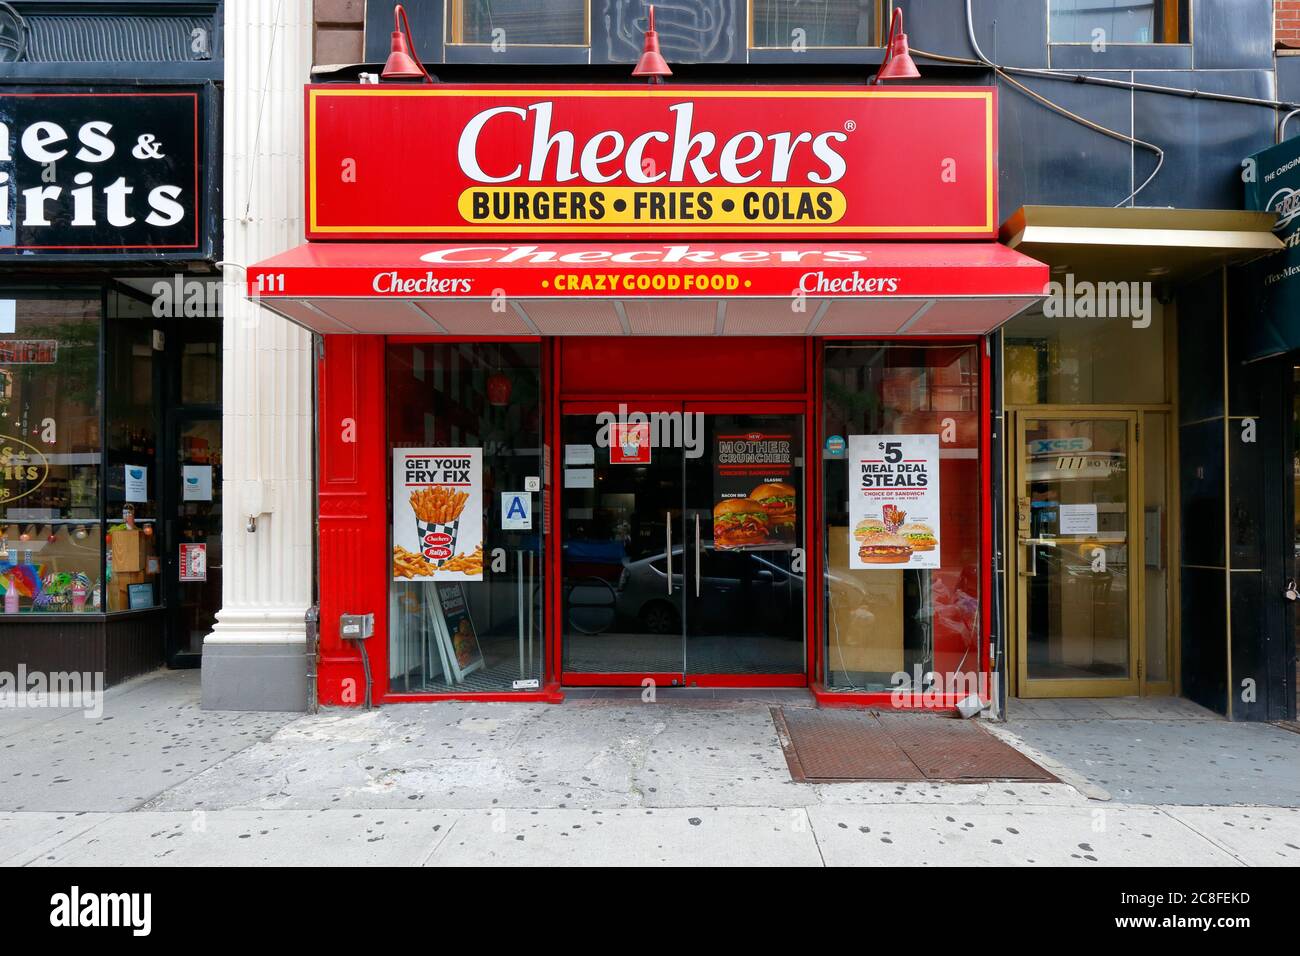 Checkers, 111 Court St, Brooklyn, New York, NYC Foto von einem Fast-Food-Hamburger-Restaurant in Downtown Brooklyn. Stockfoto